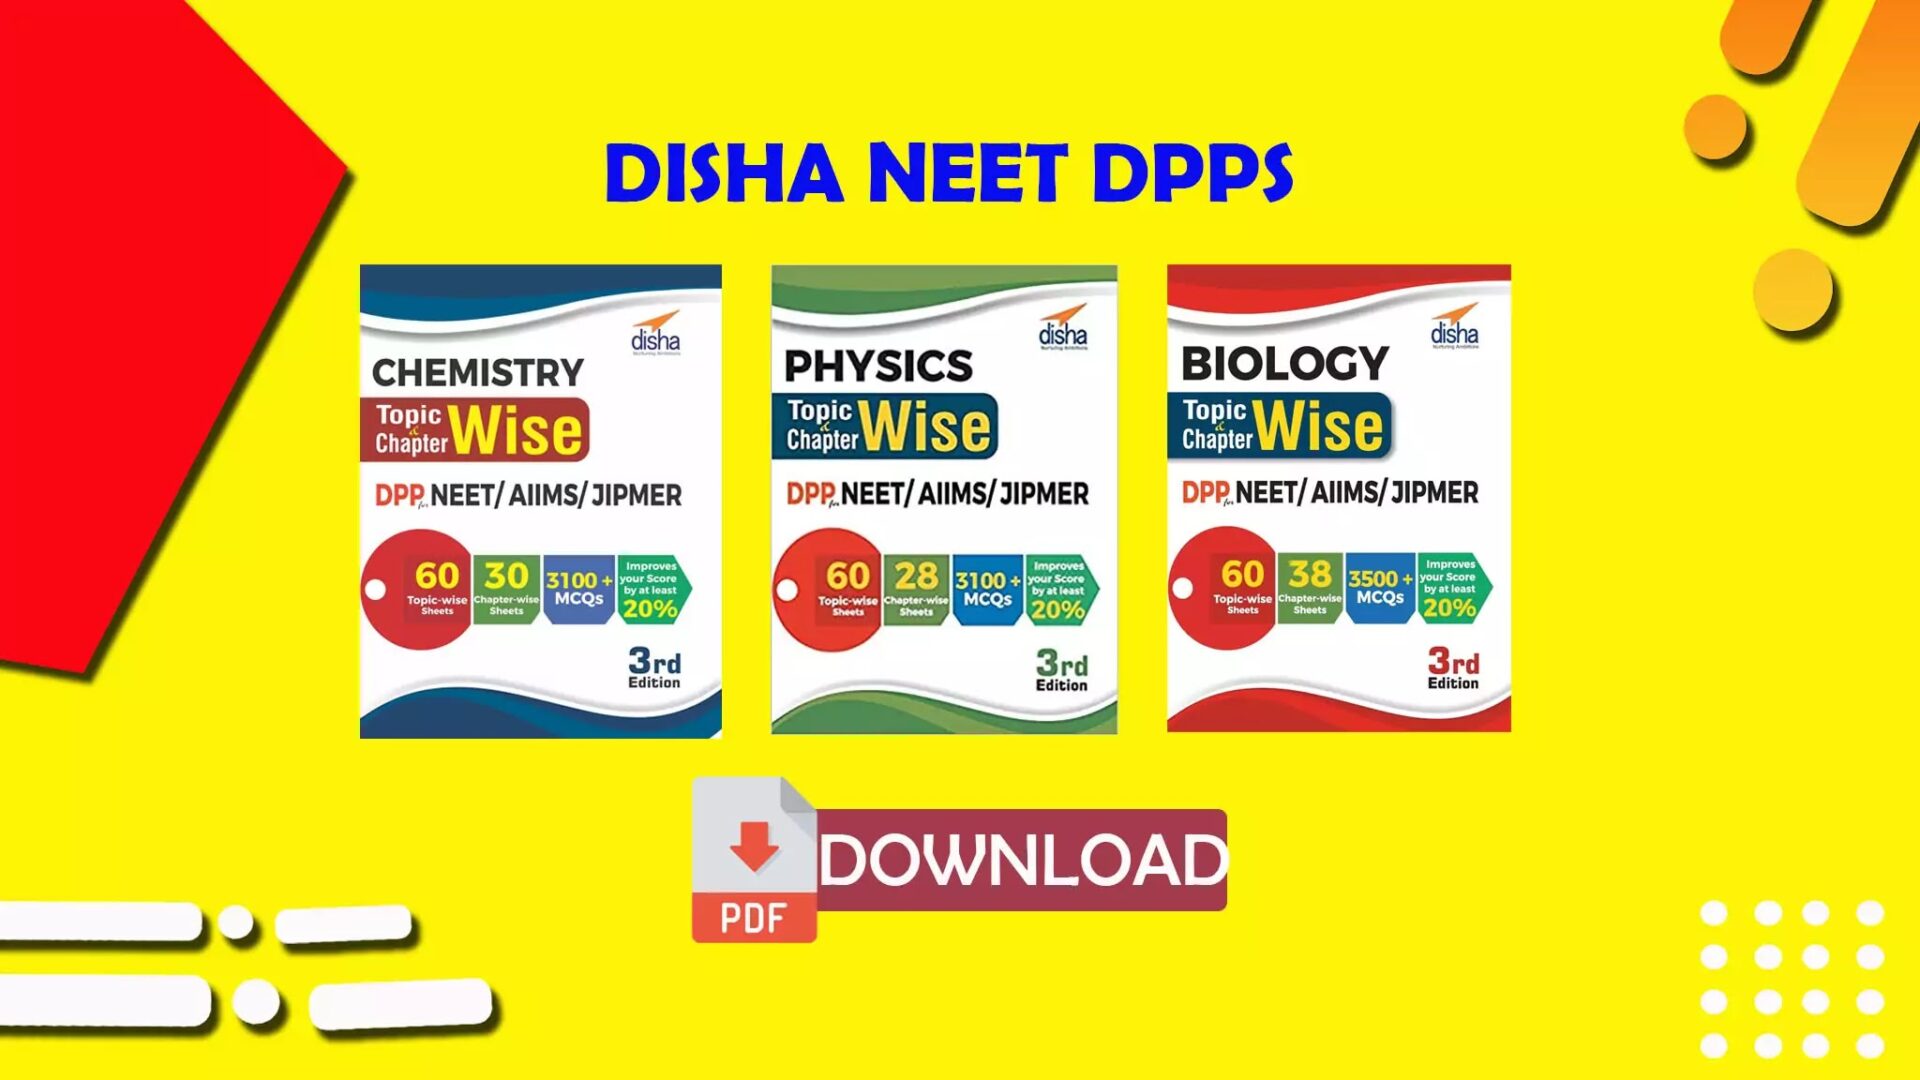 Disha Chapterwise DPP for NEET Chemistry